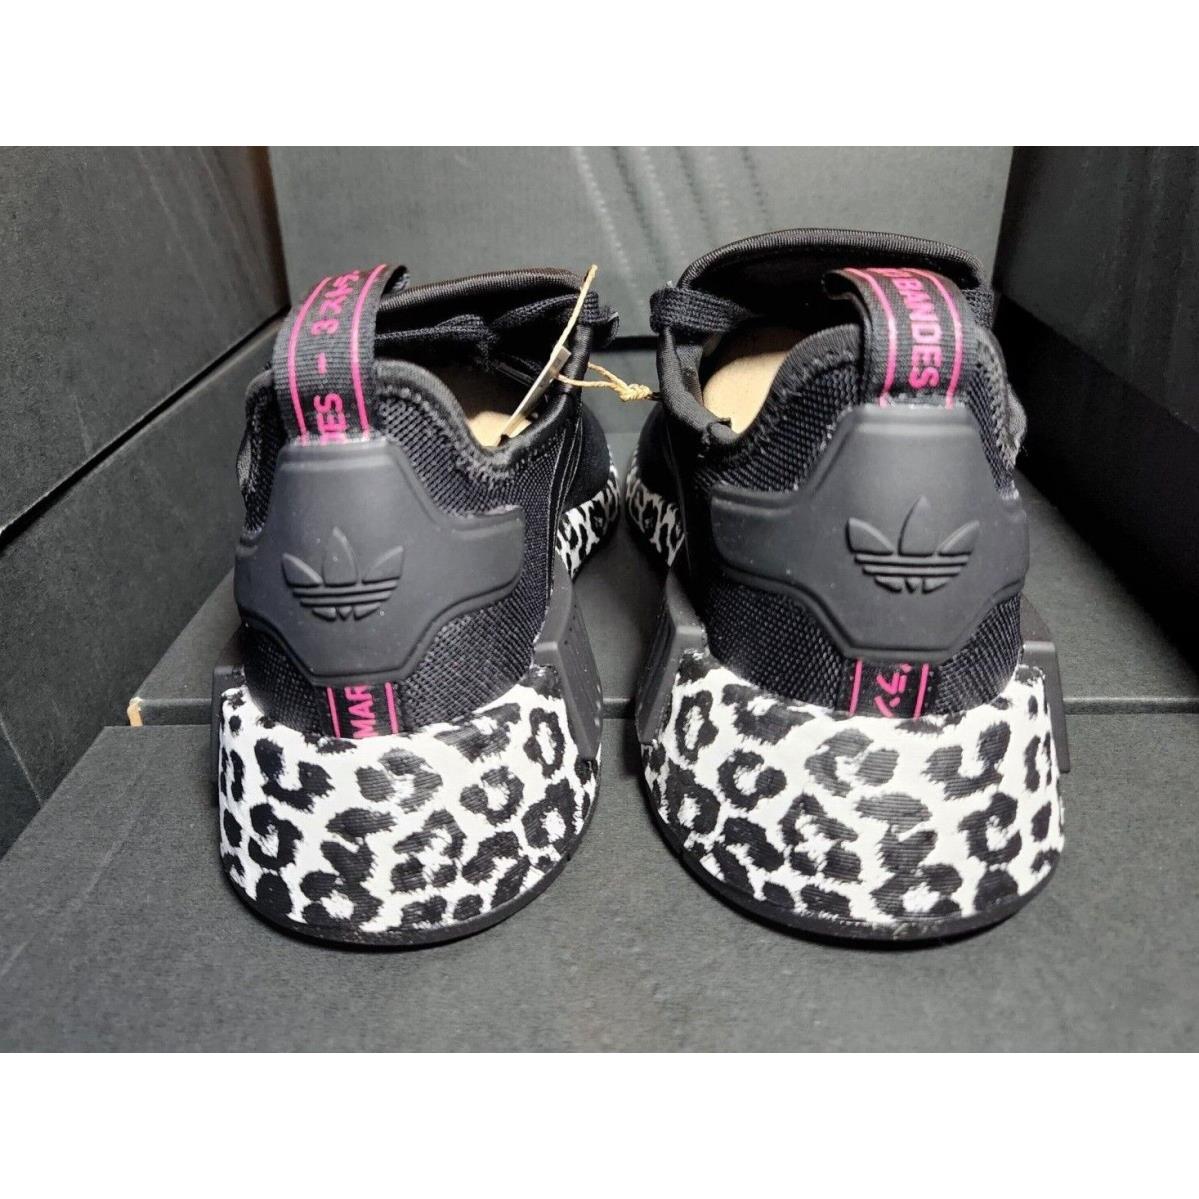 Adidas shoes NMD - Black 5